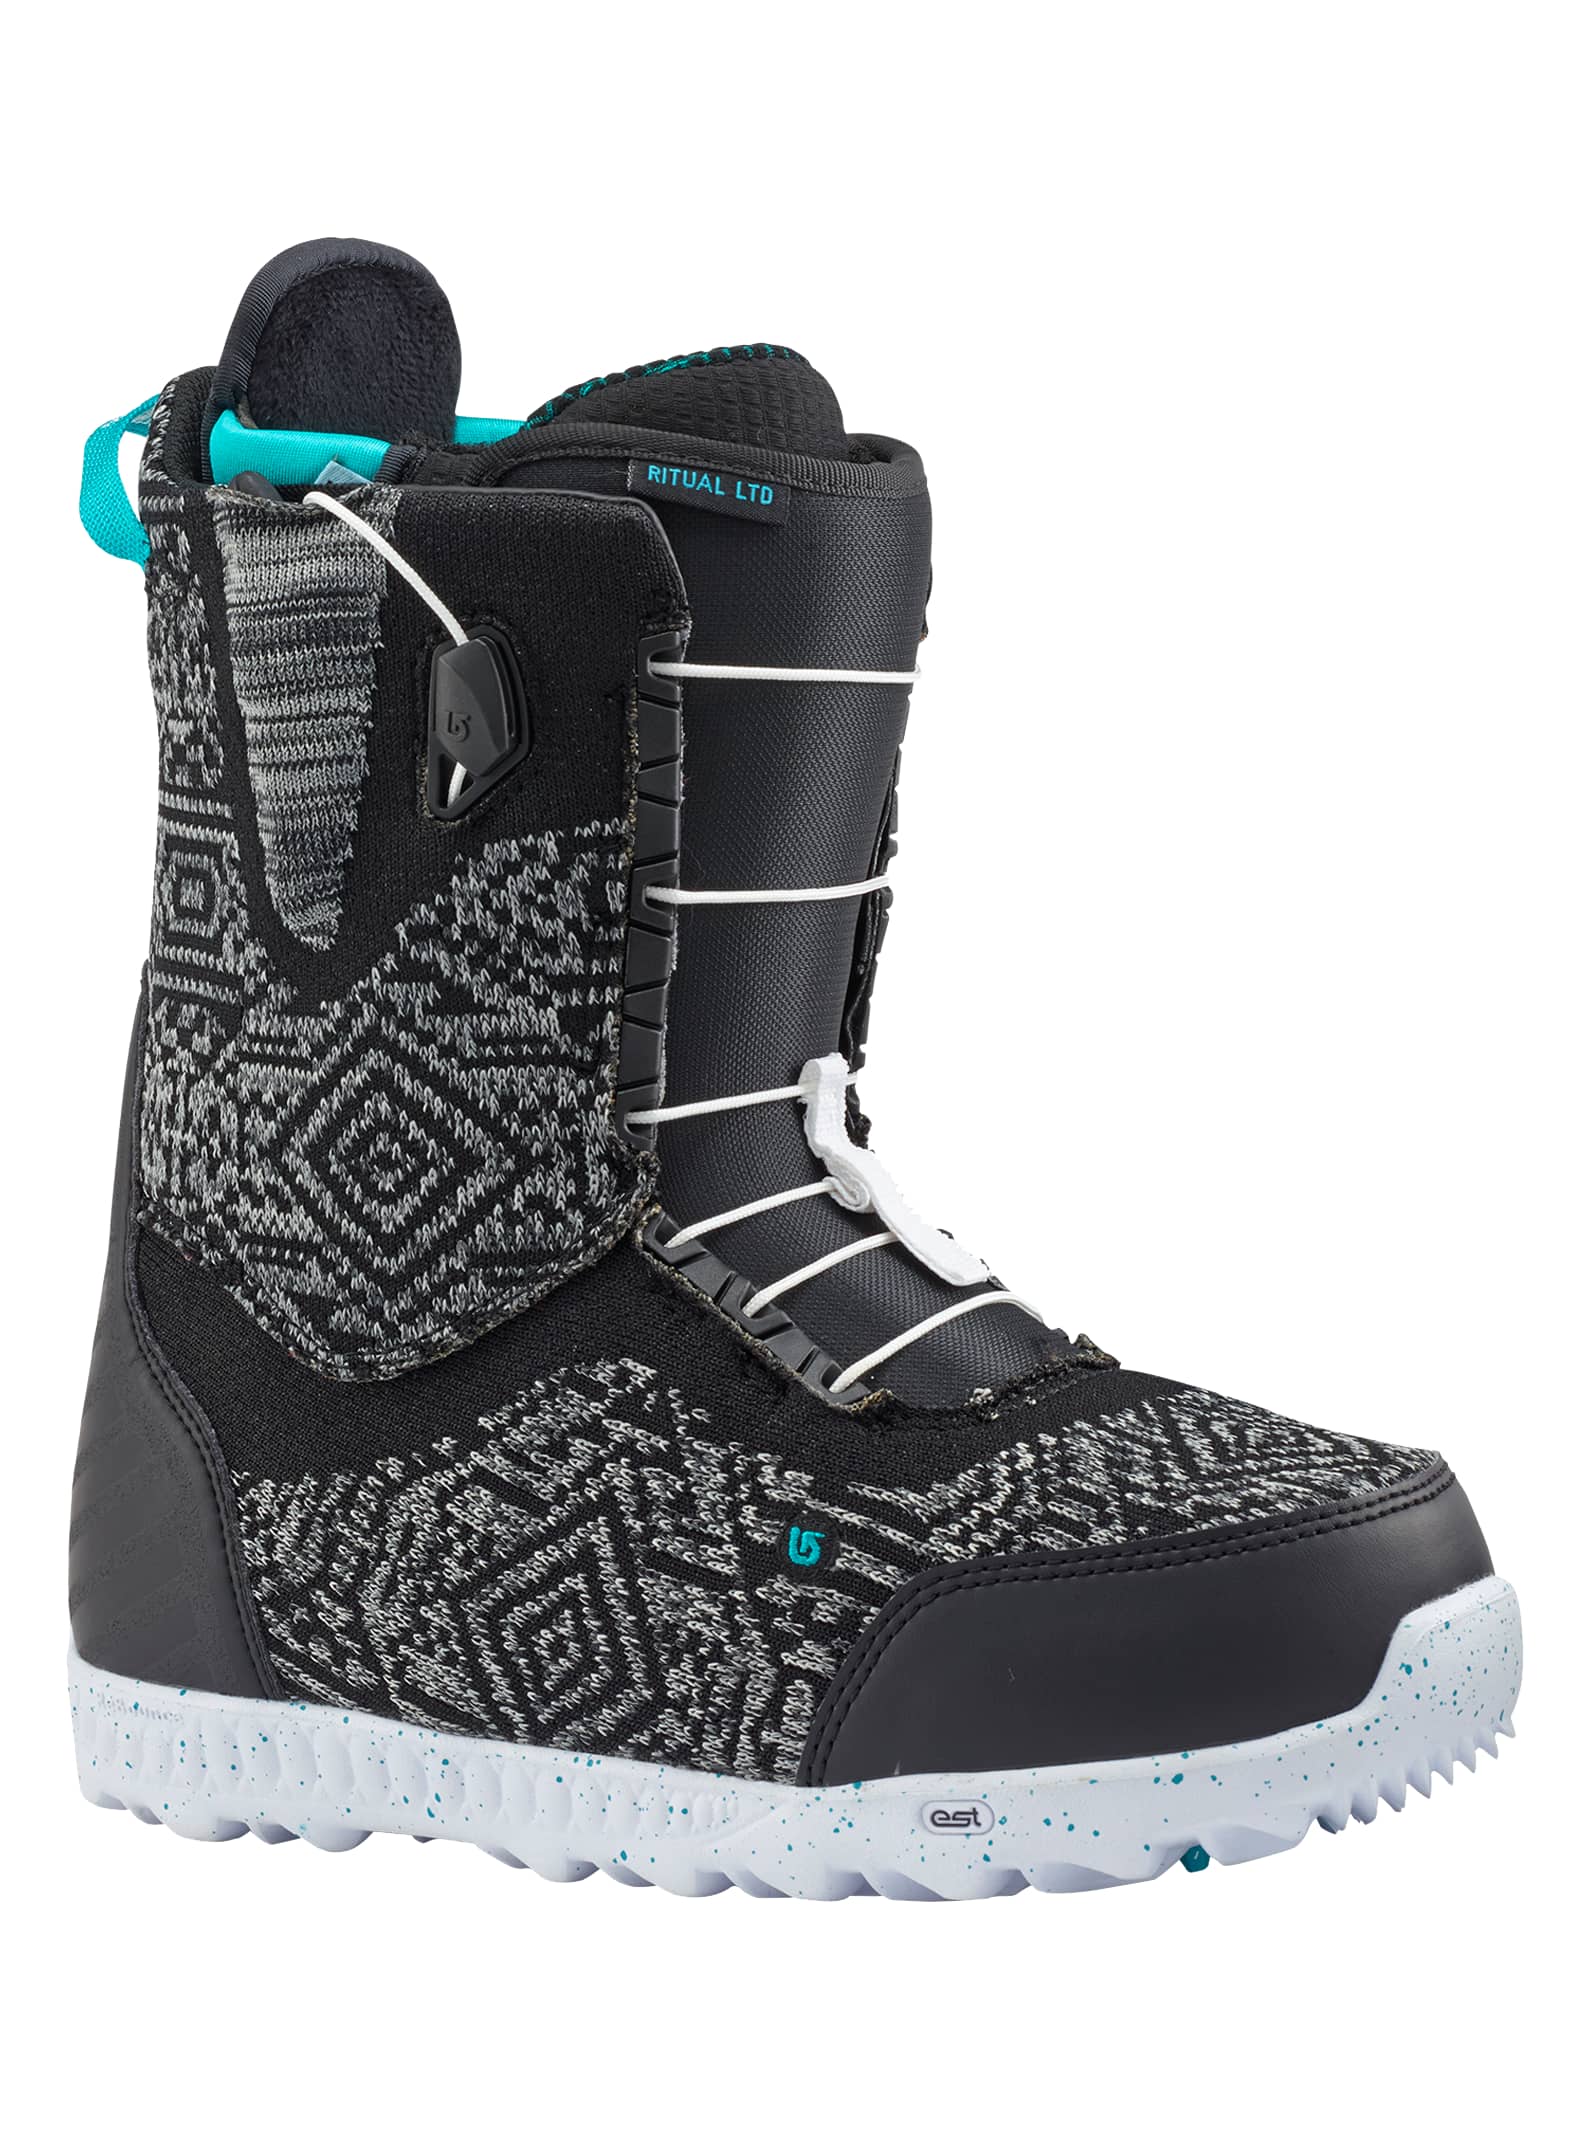 Burton - Boots de snowboard Ritual LTD femme, Black / Multi, 11